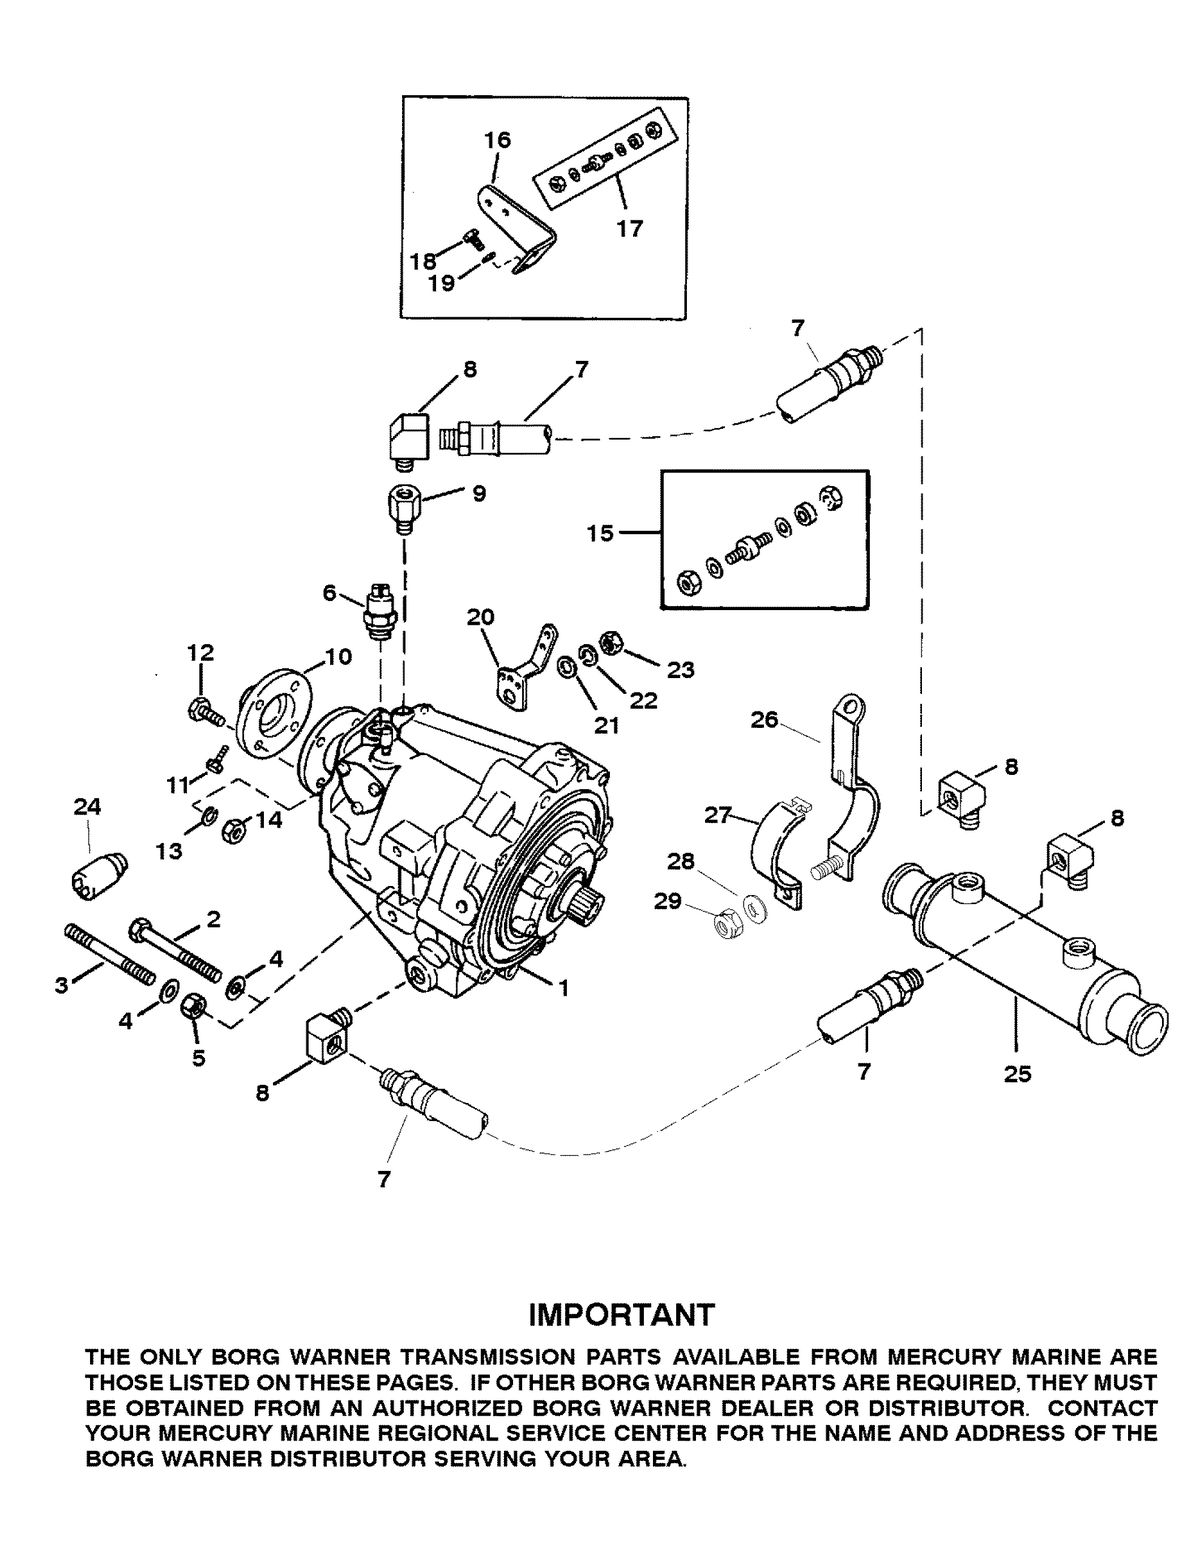 MERCRUISER 5.7L INBOARD ENGINE TRANSMISSION AND RELATED PARTS (BORG WARNER 71C)